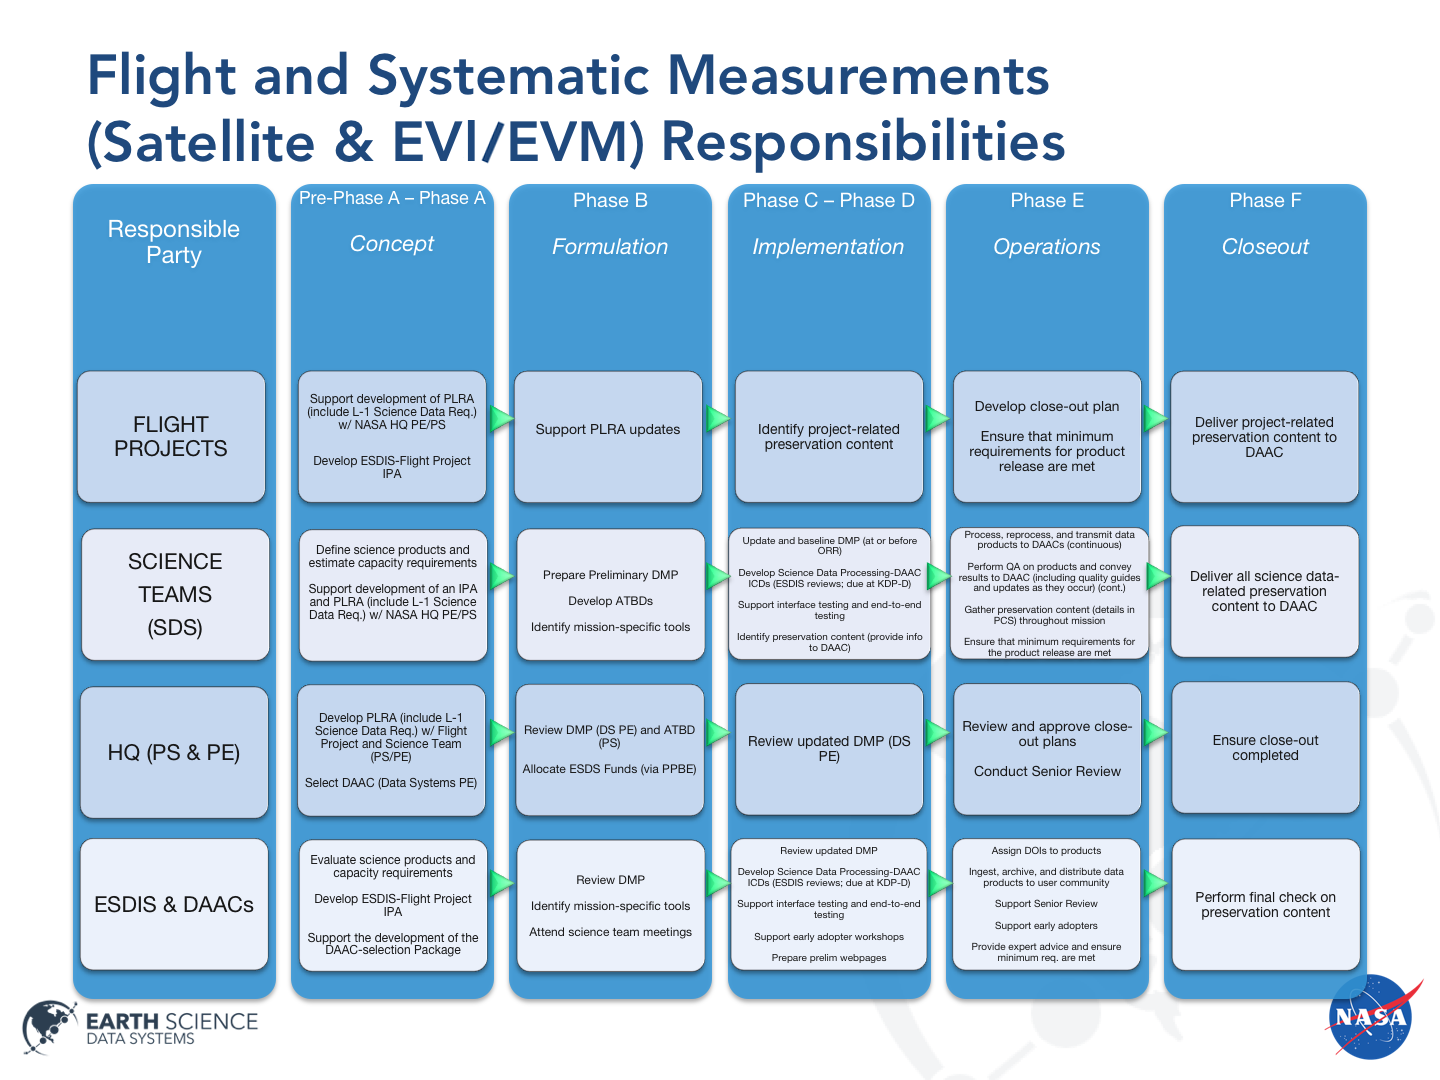 Flight and Systematic Measurements (satellite, EVI/EVM) Responsibilities